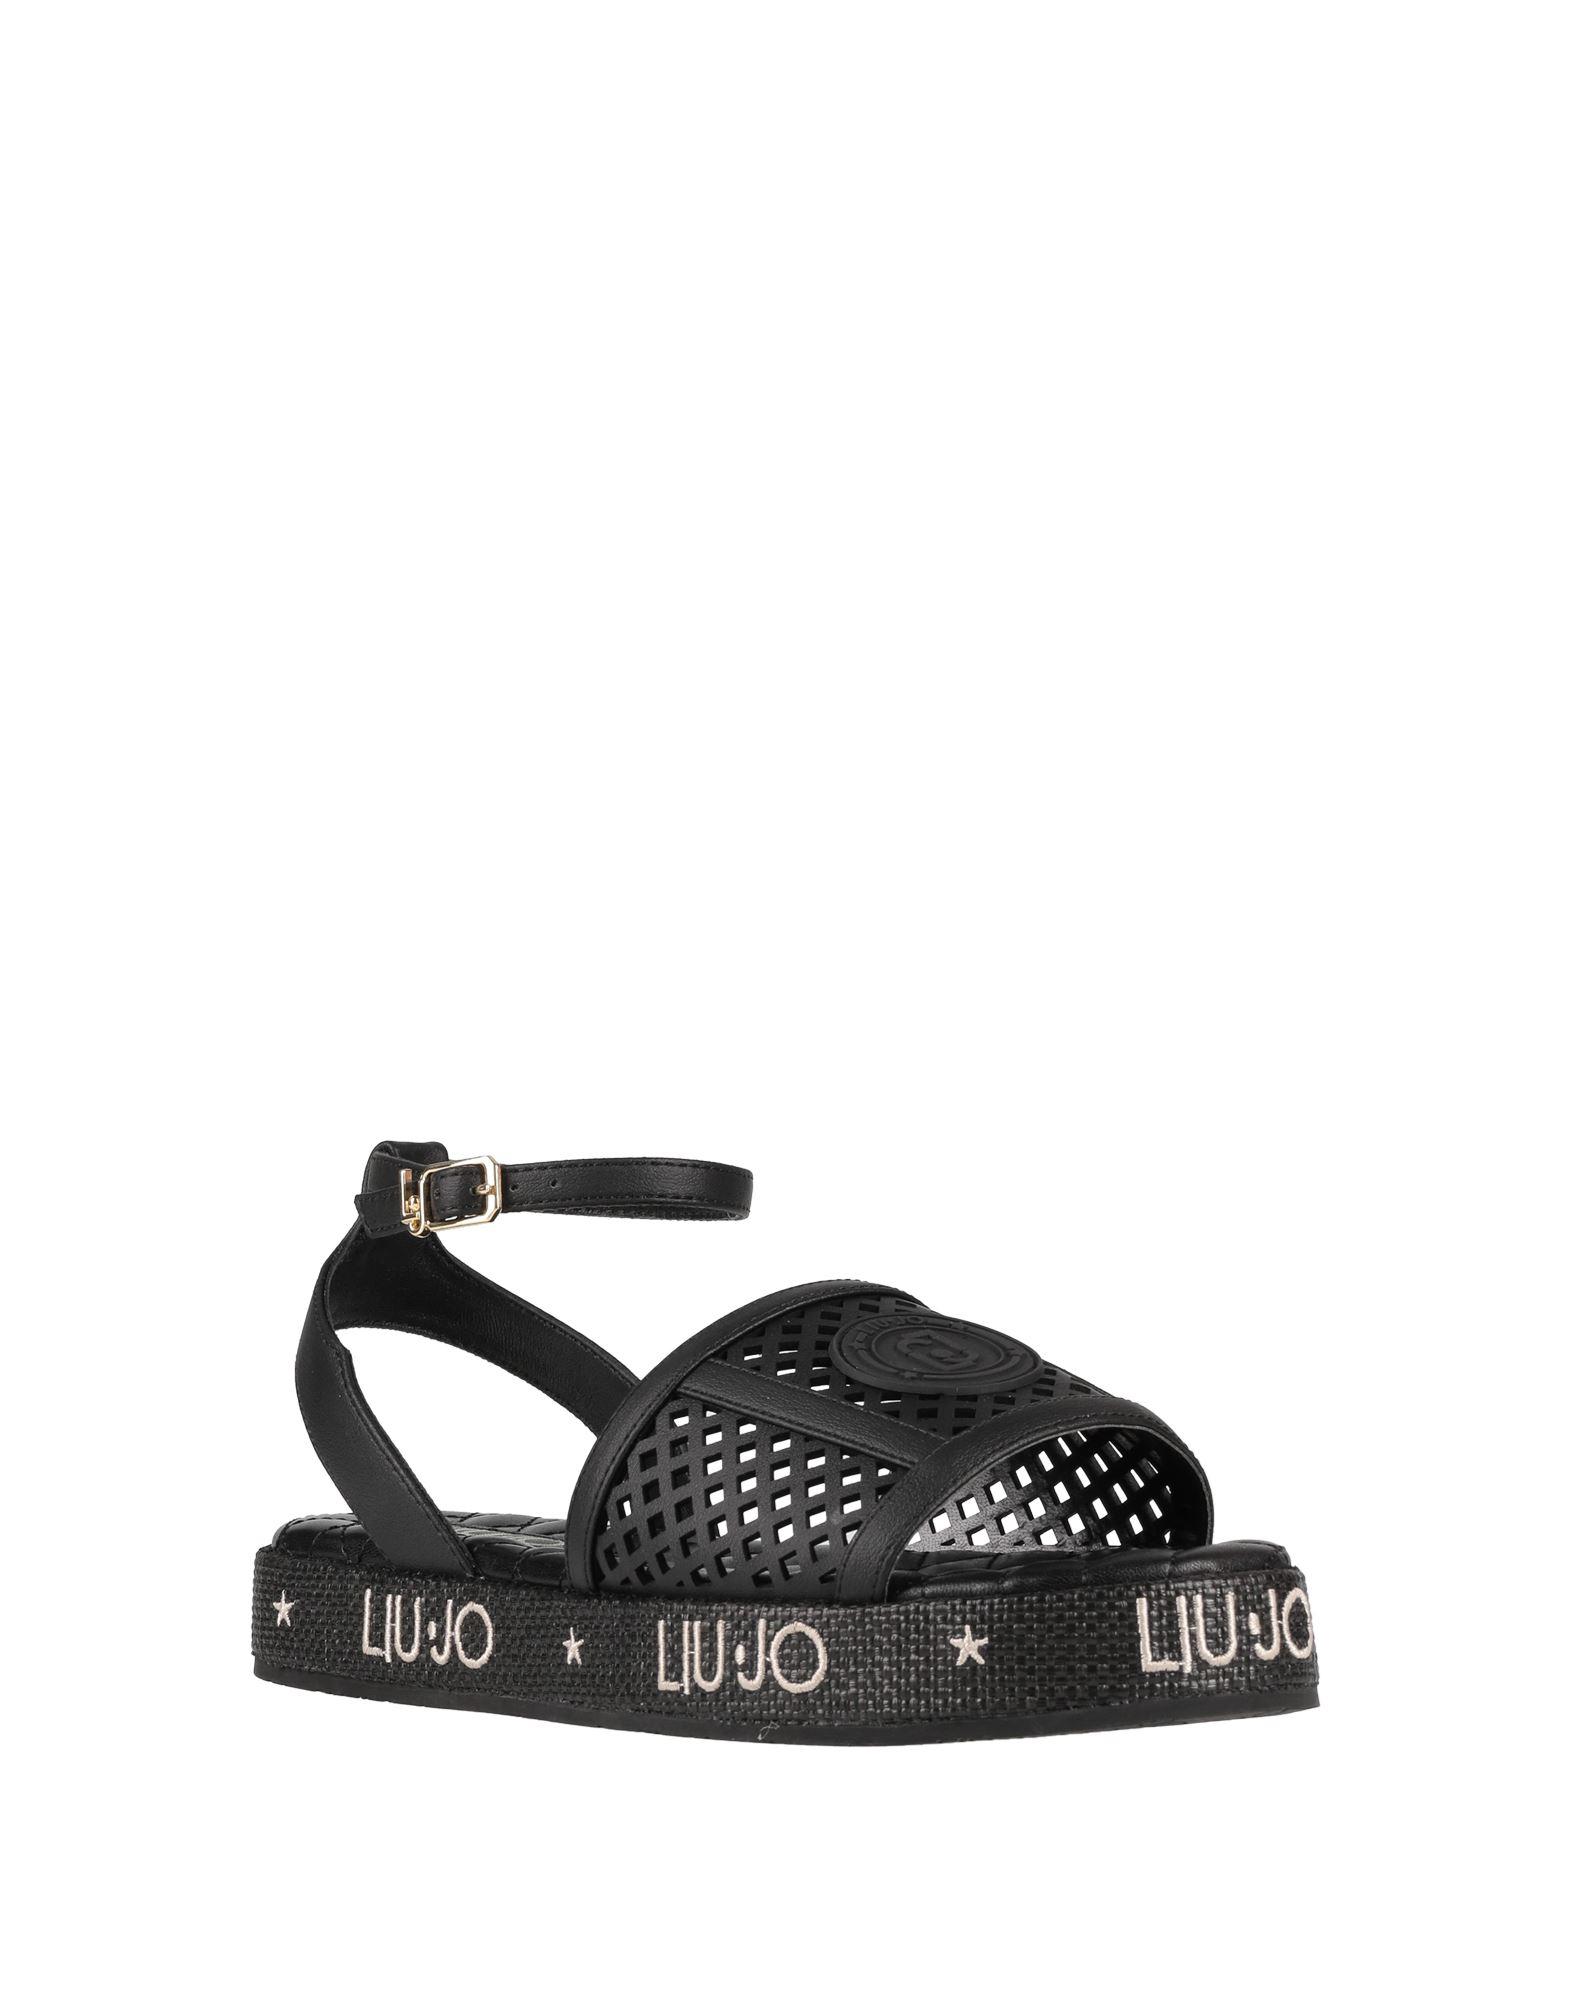 Liu Jo Sandals in Black | Lyst